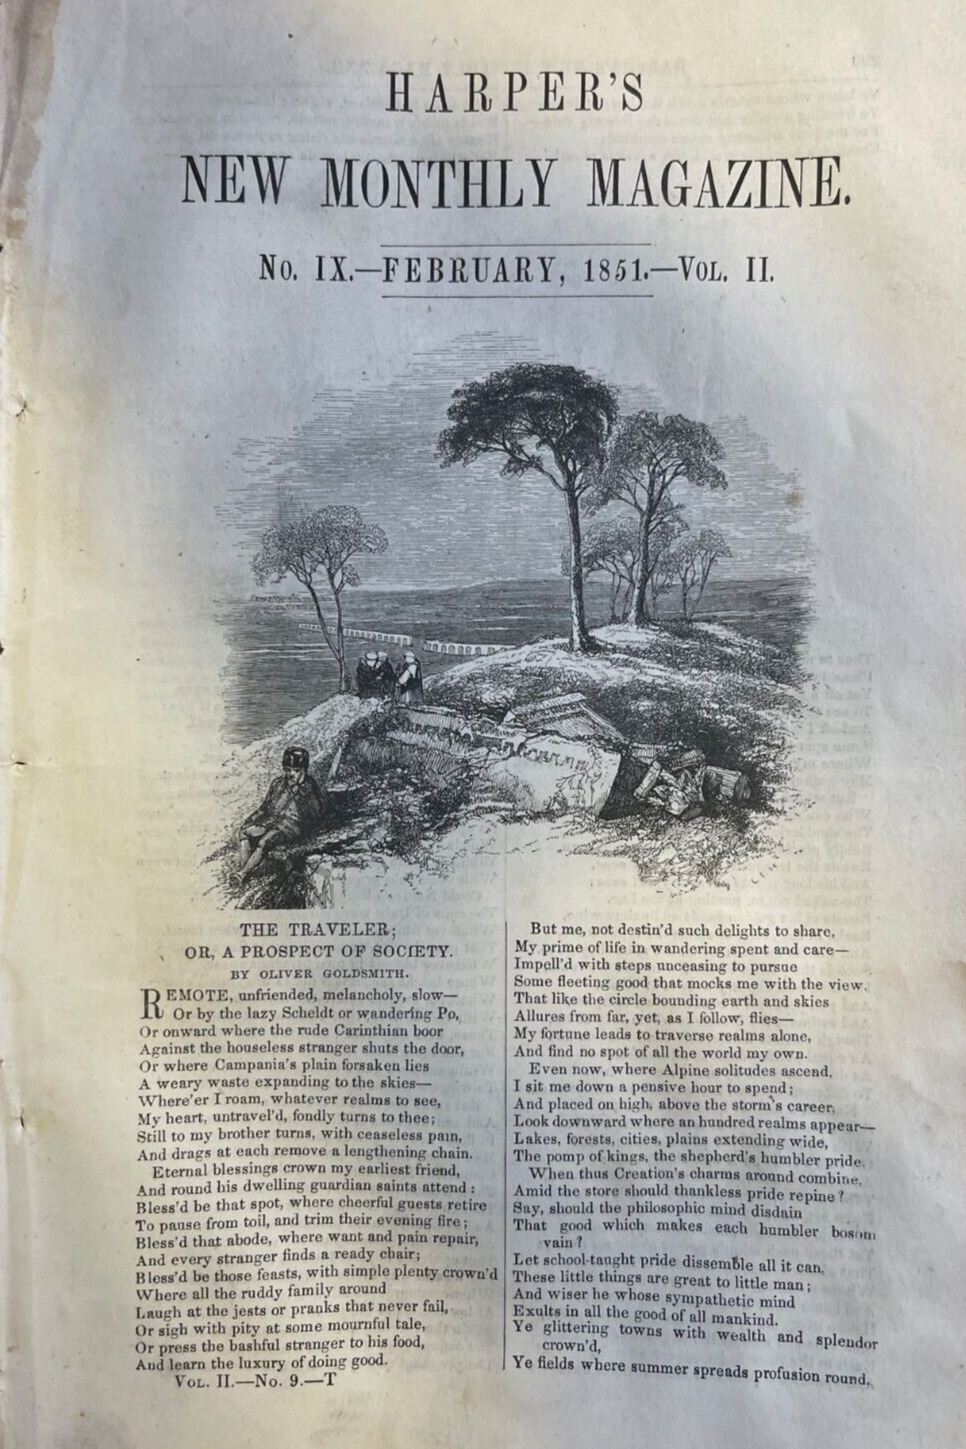 1851 Illustrated Poem The Traveler by Oliver Goldsmith